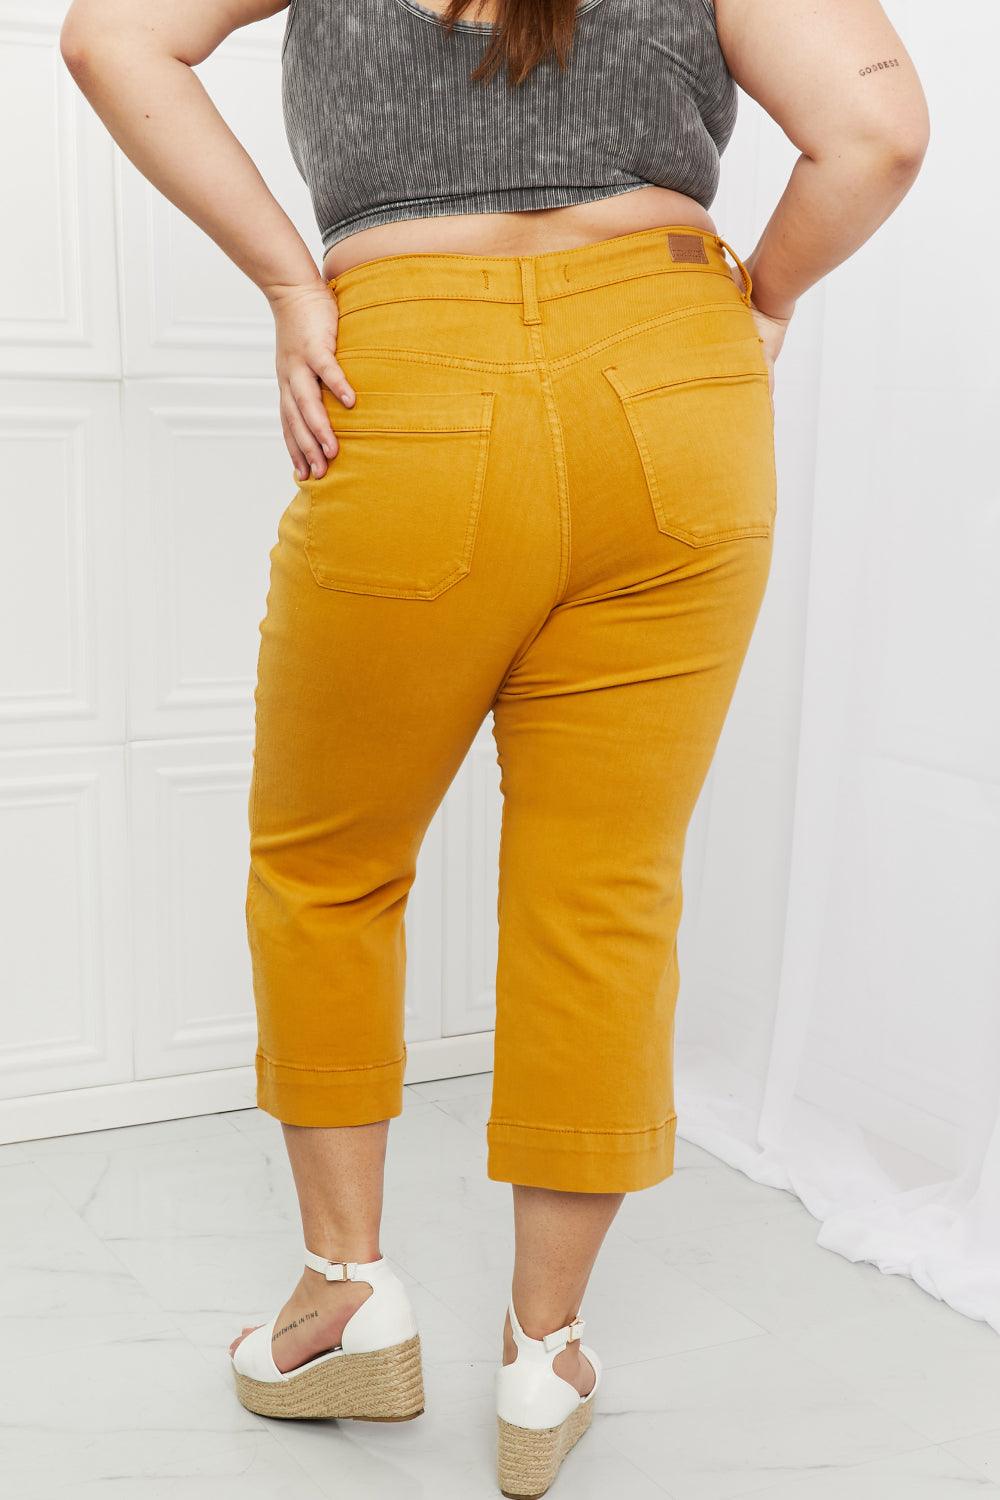 Judy Blue Jayza Full Size Straight Leg Cropped Jeans - The Fiery Jasmine